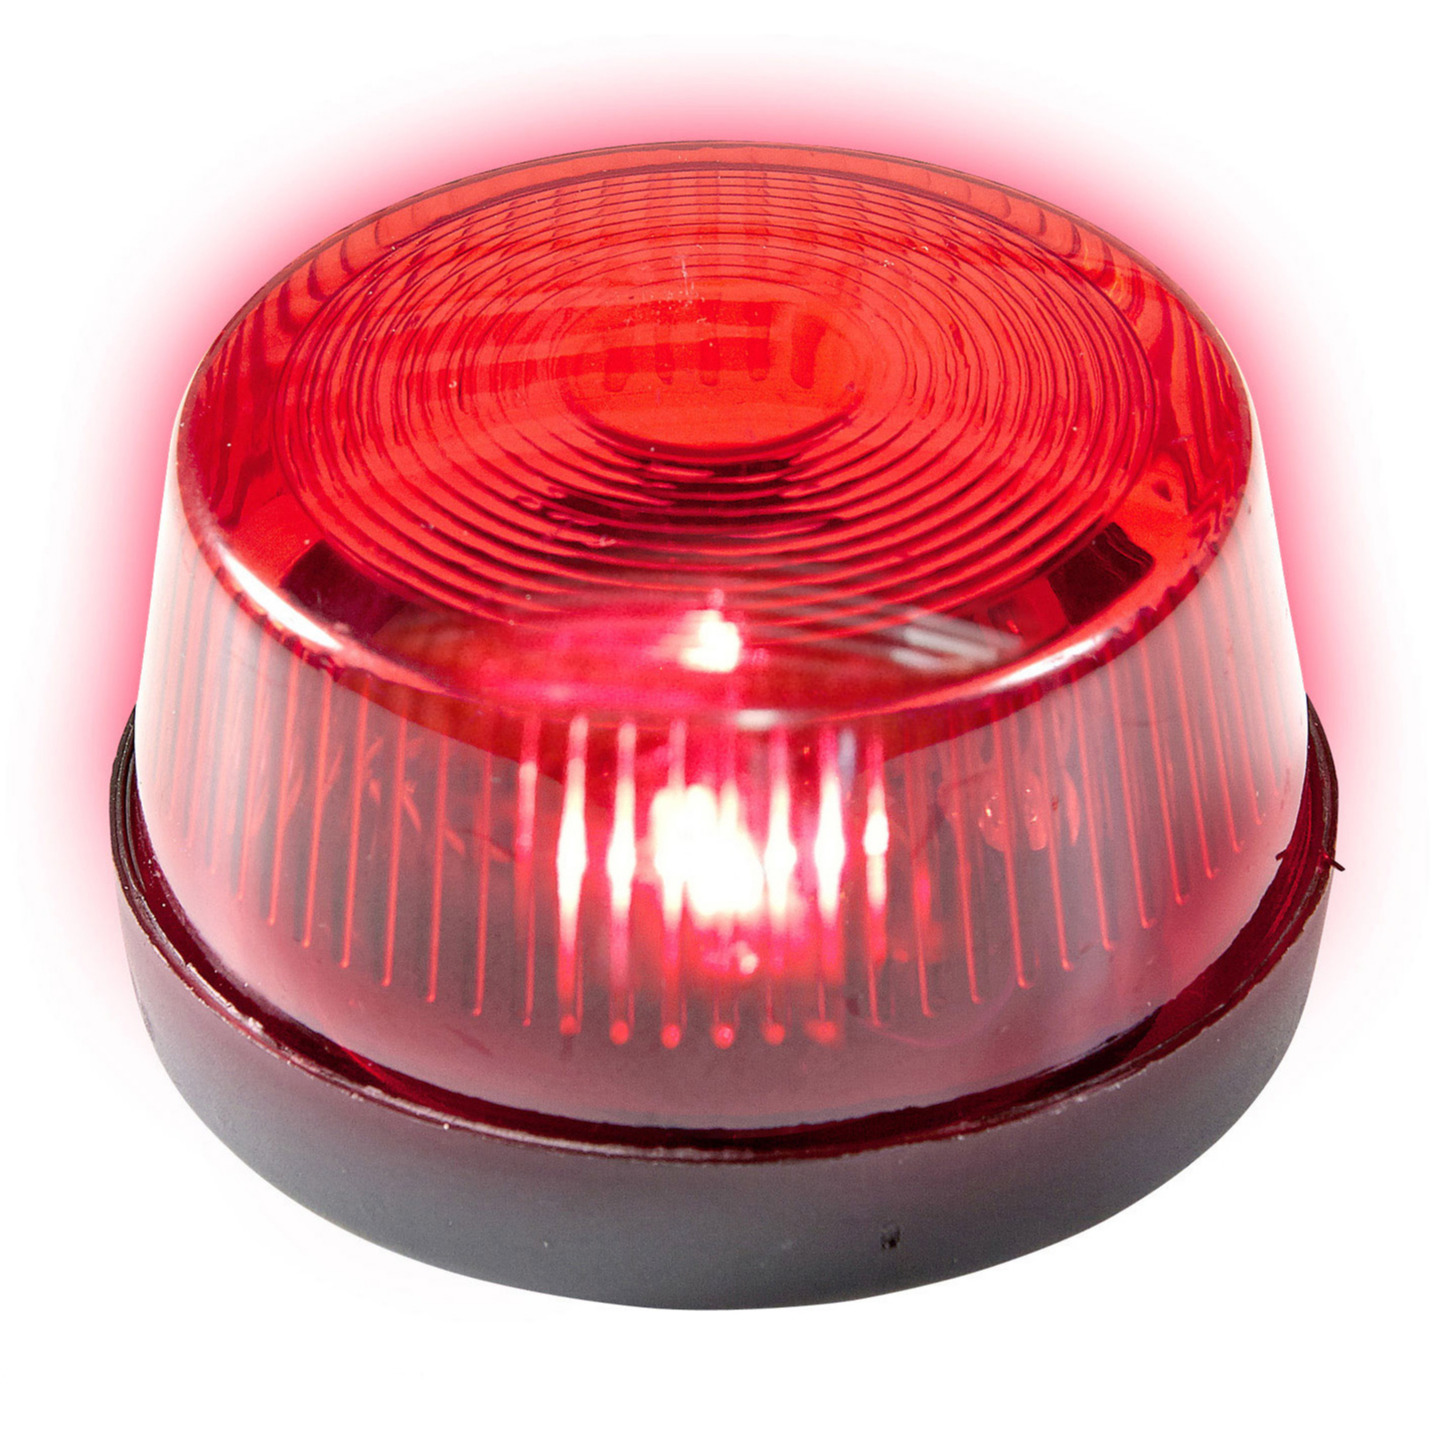 Signaallamp-signaallicht rood LED licht 7 cm politie speelgoed-feestverlichting